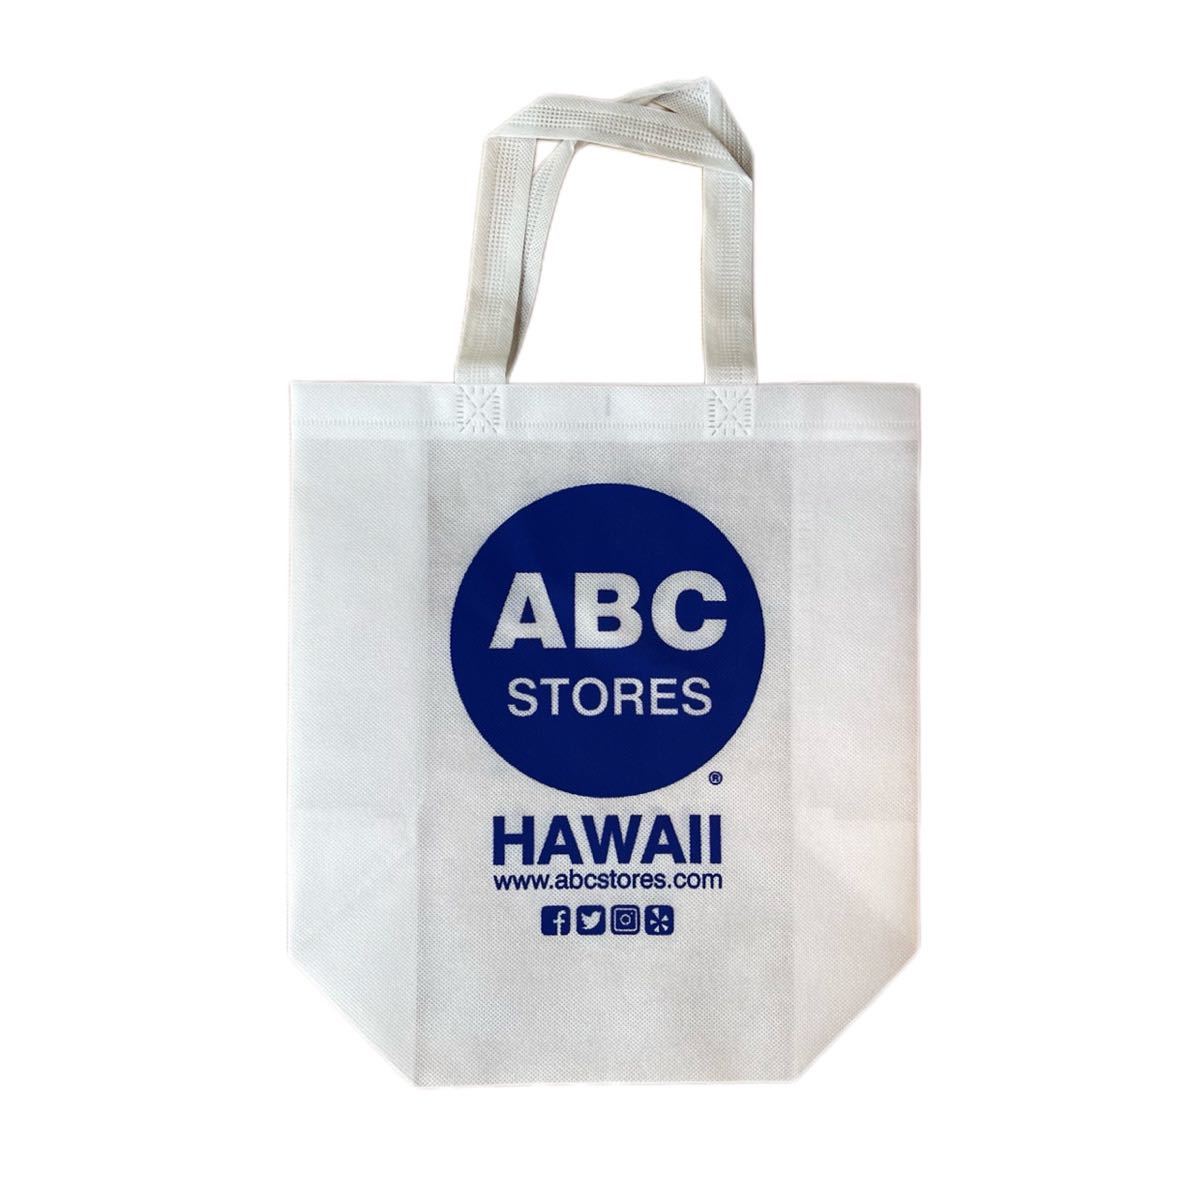 ABC STORE эко-сумка F33 Гаваи eko задний usdm jdm hdm Гаваи смешанные товары America смешанные товары american смешанные товары большая сумка покупка сумка 